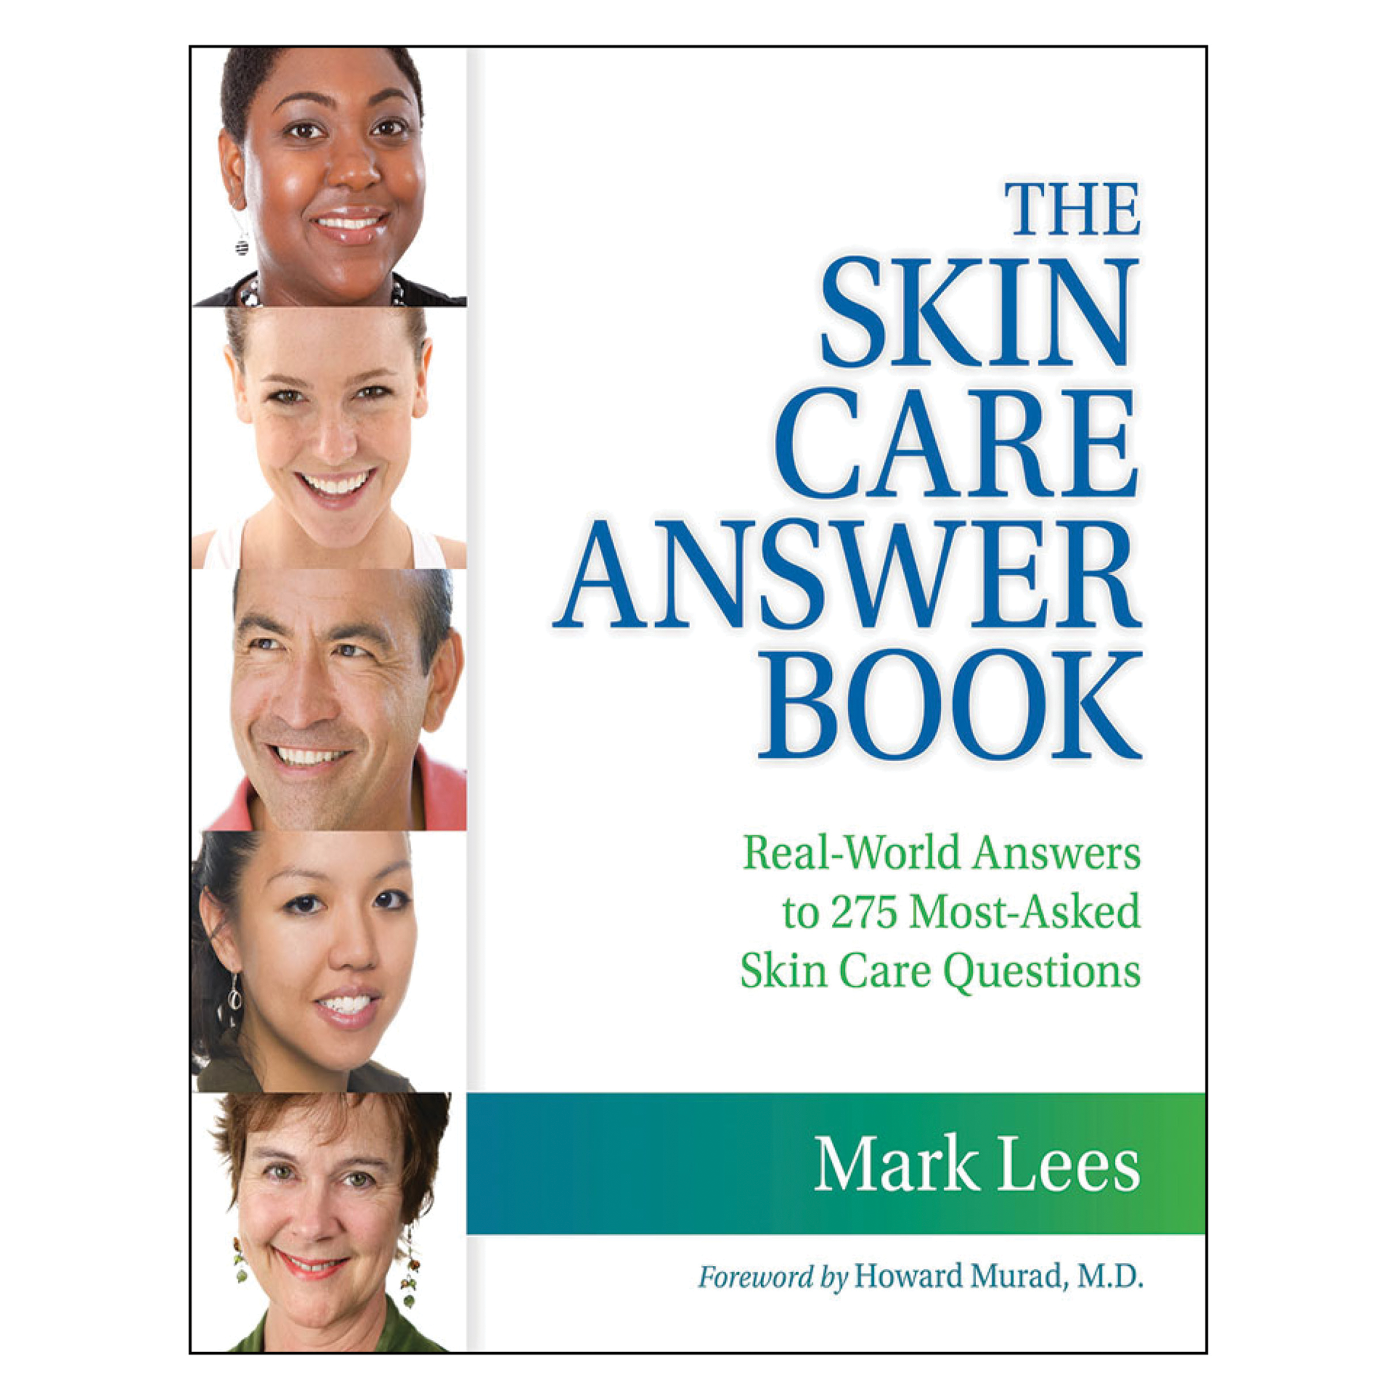 The Skin Care Answer Book